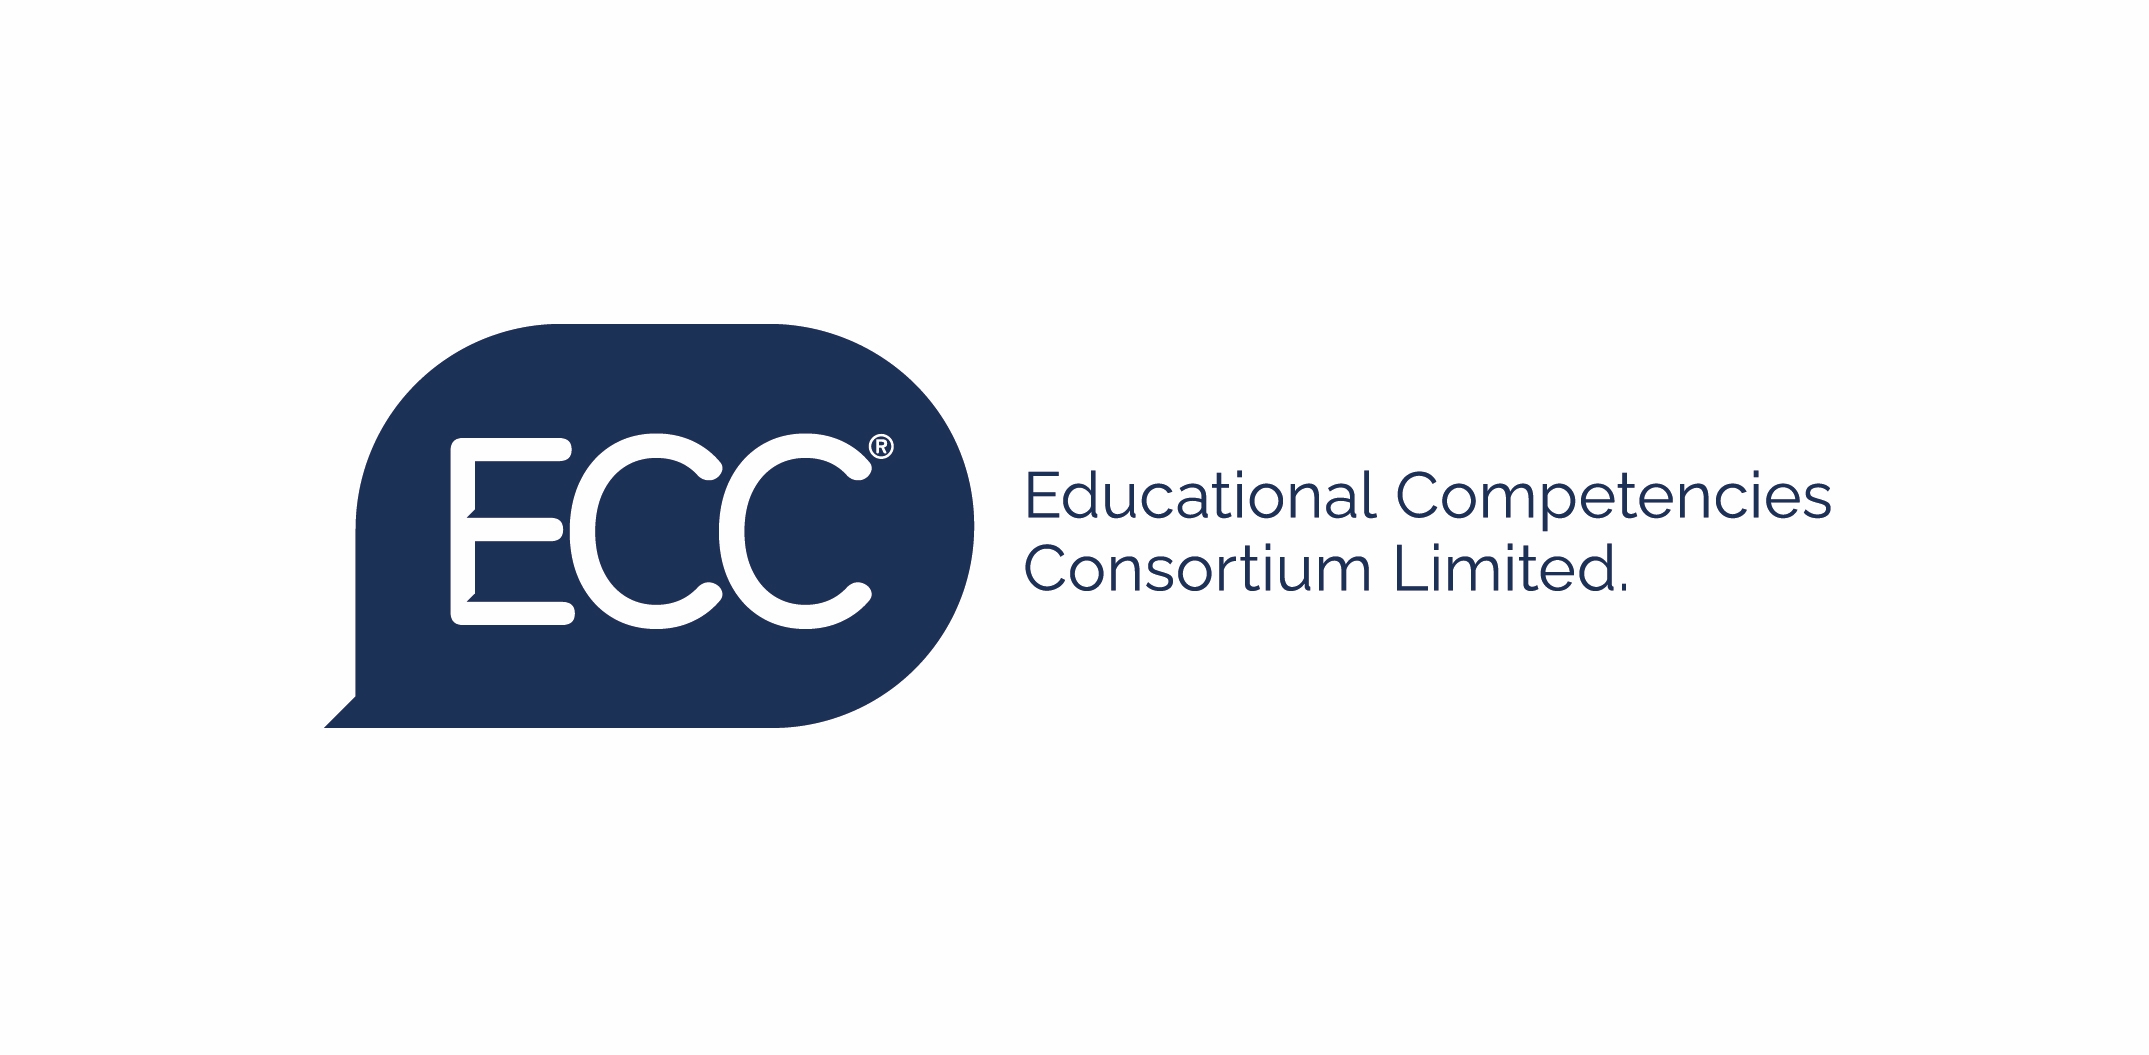 Company logo image - Educational Competencies Consortium Limited